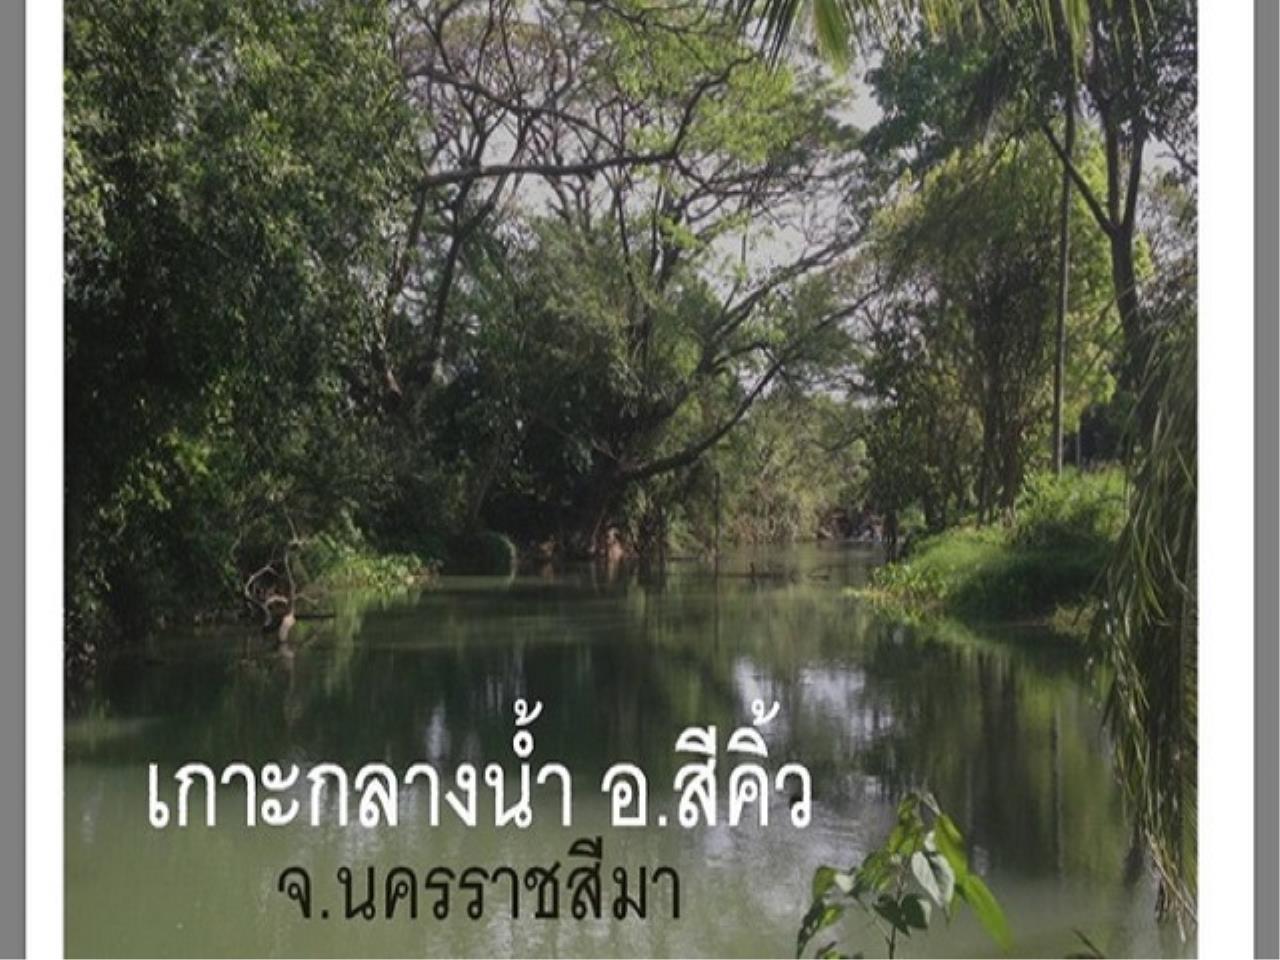 38228 - Amphoe sikhio Nakhon Ratchasima Land for sale plot size 54, ภาพที่ 4